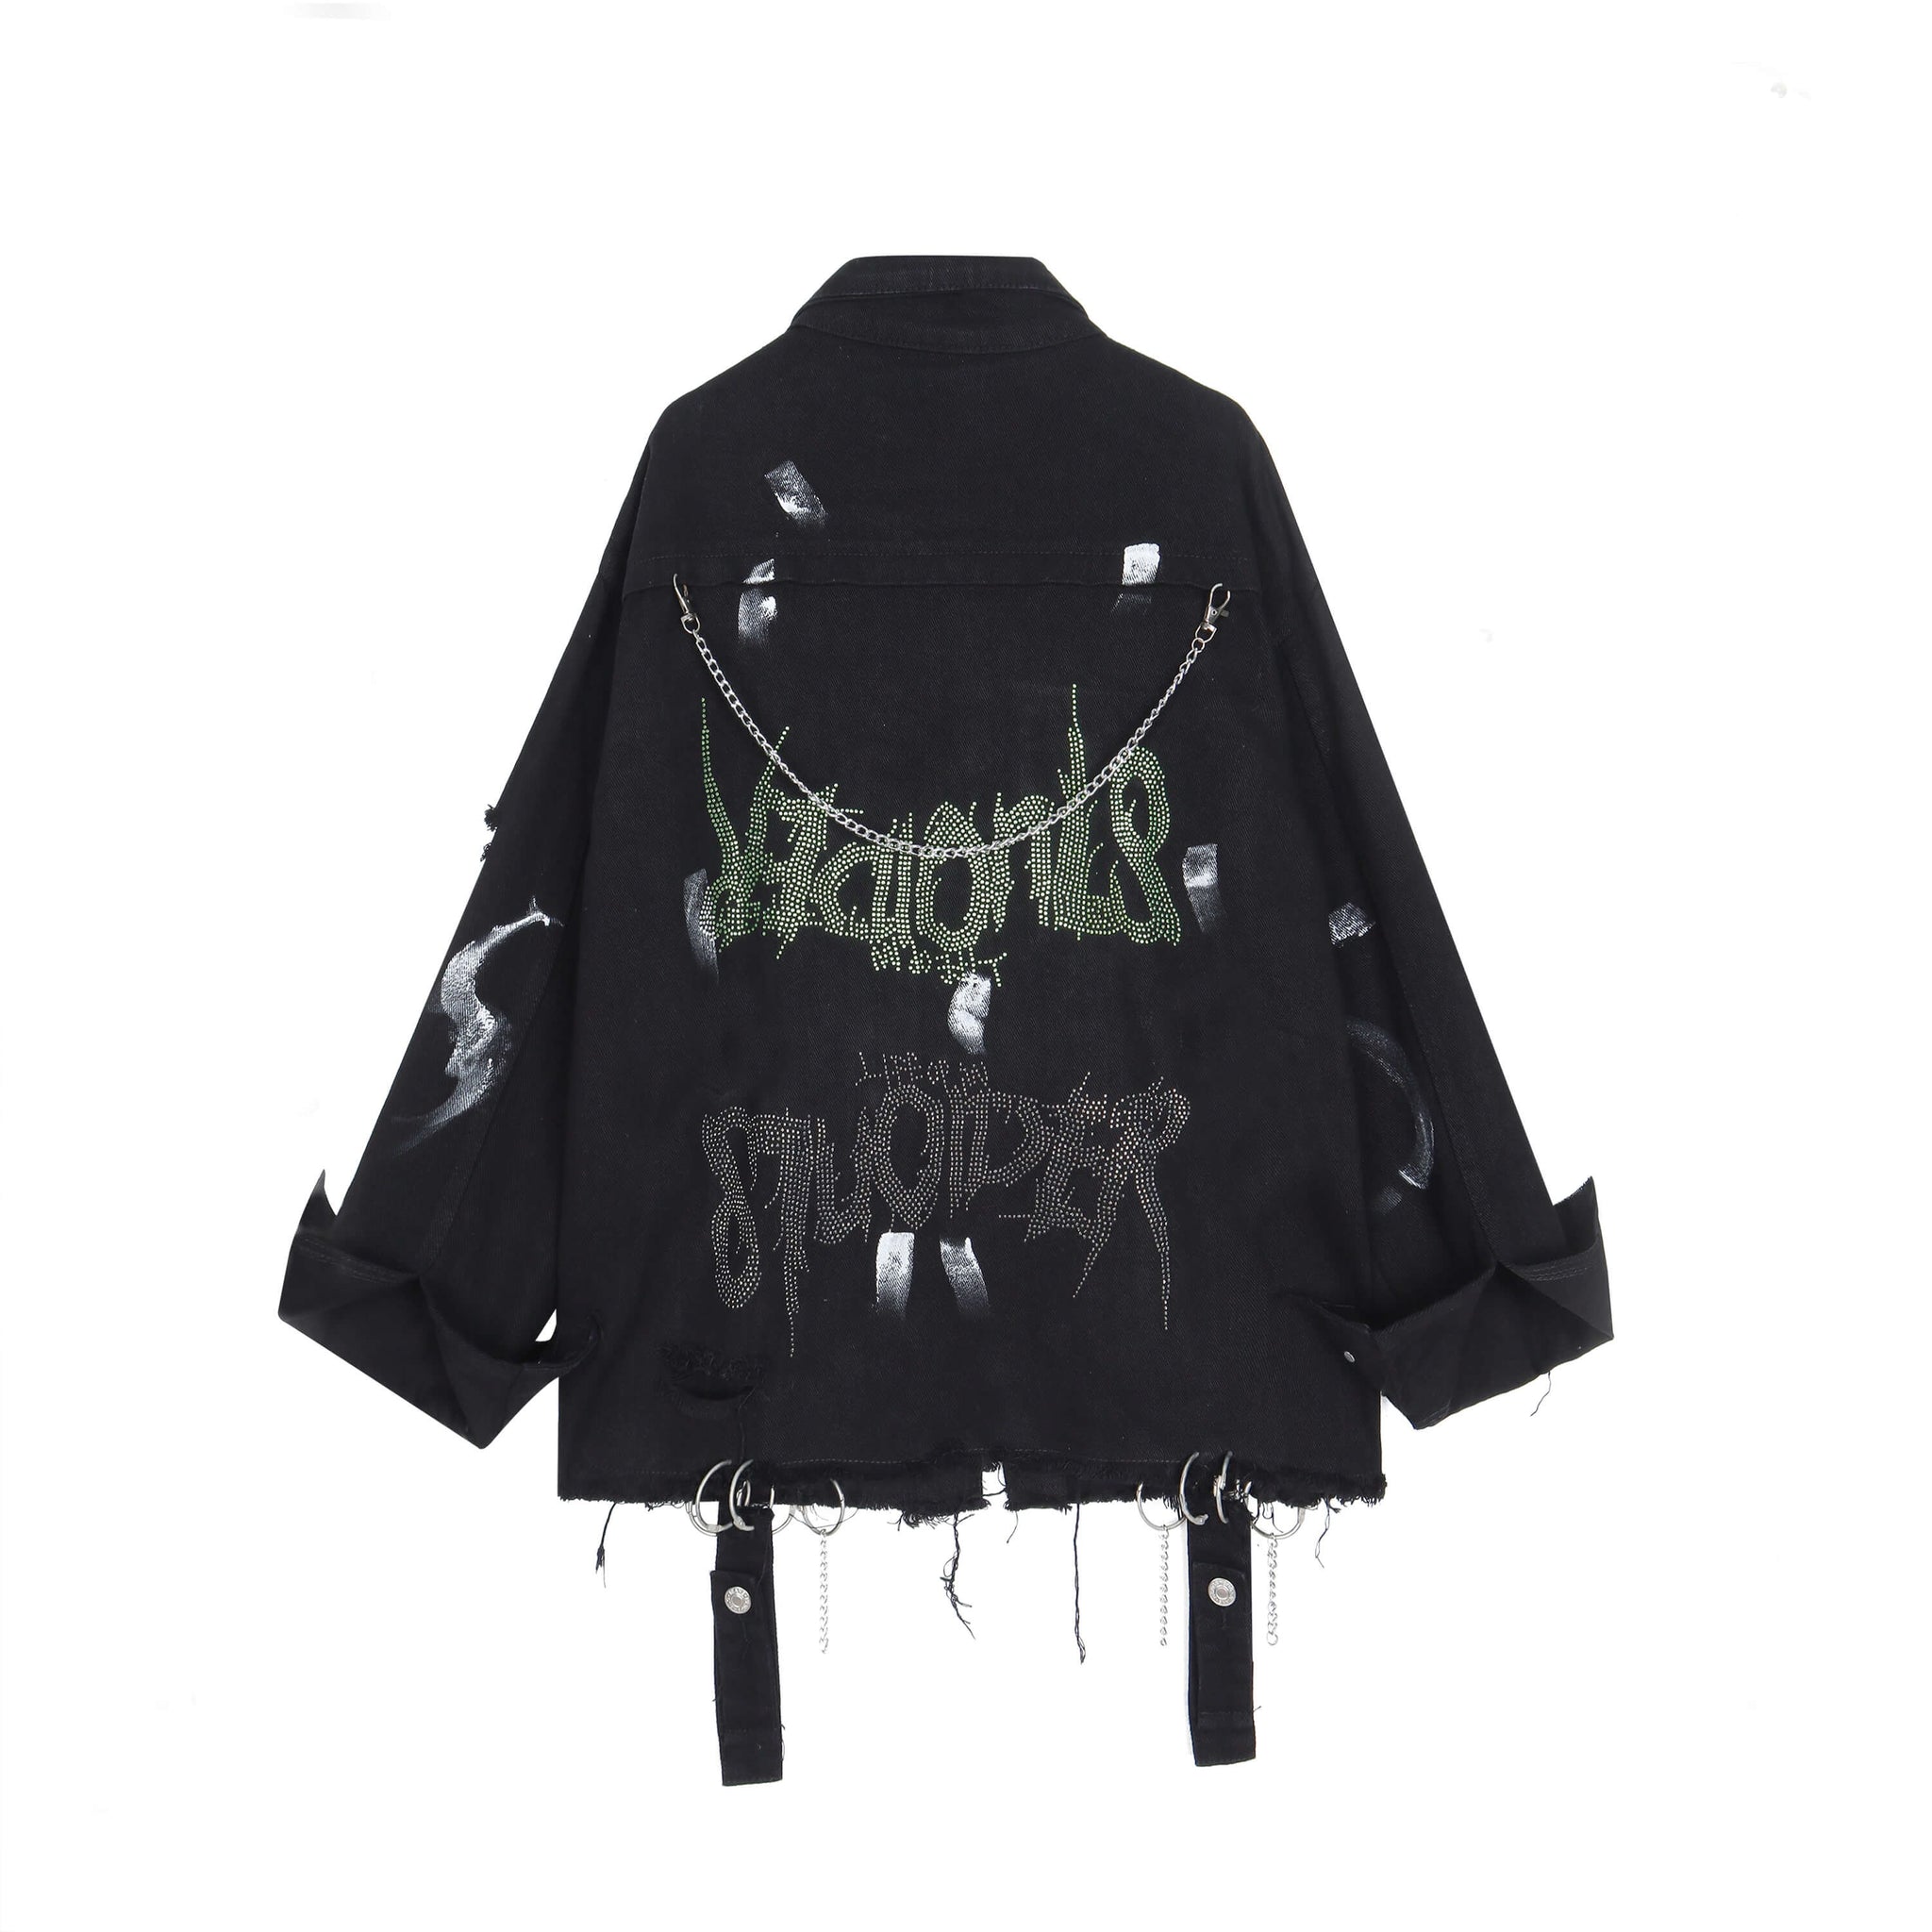 Rhinestones Chains Patchwork Collage Black Grunge Aesthetic Denim Jacket